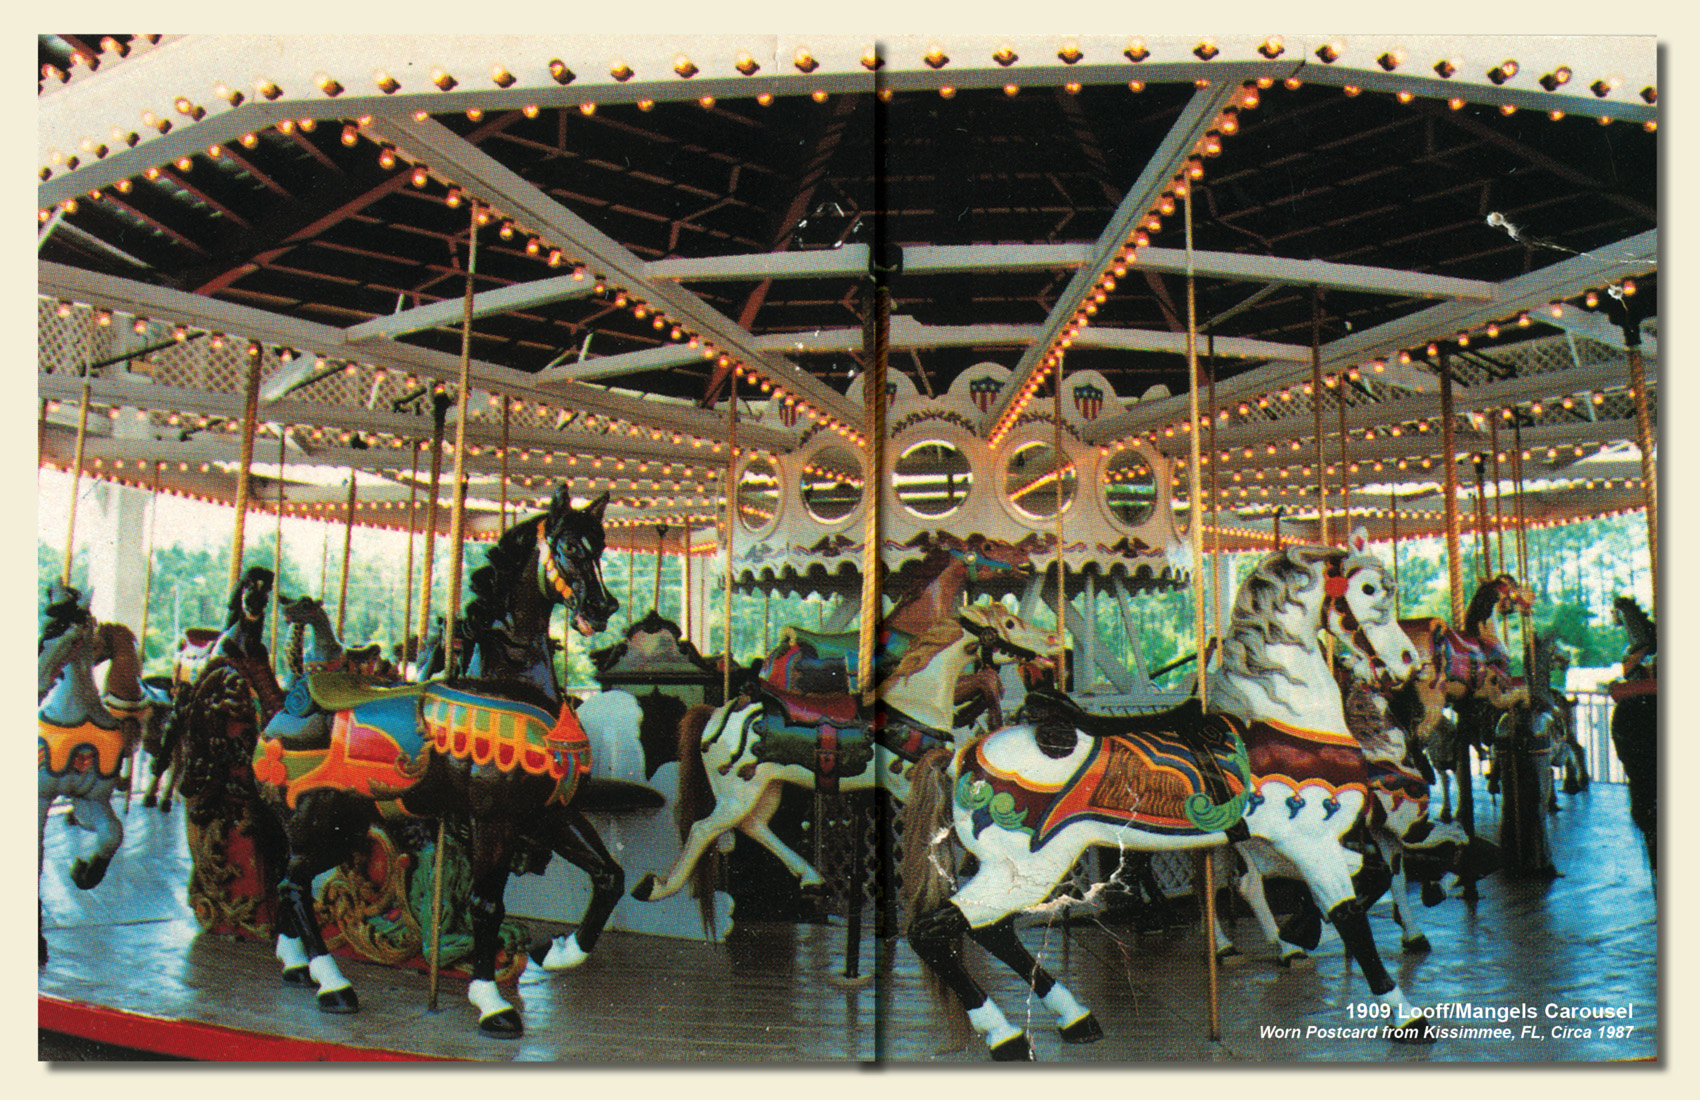 1909-Mangels-Looff-carousel-Kissimmee-FL-CNT-center-APR-08